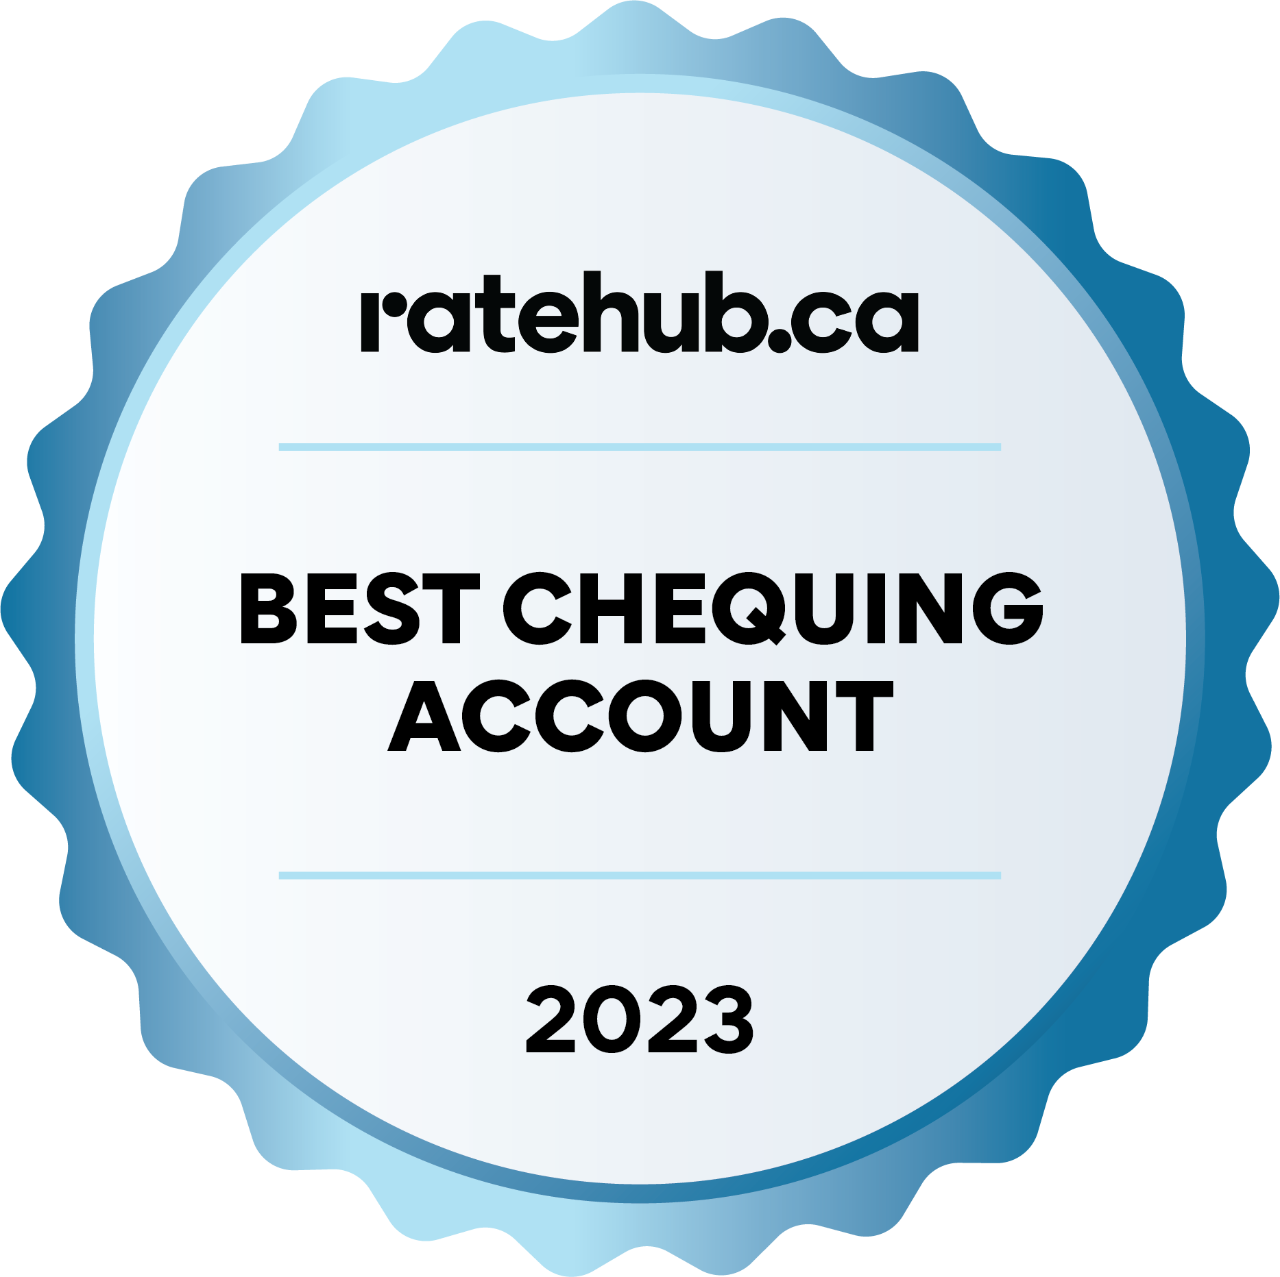 ratehub.ca Best Chequing Account 2023 logo.